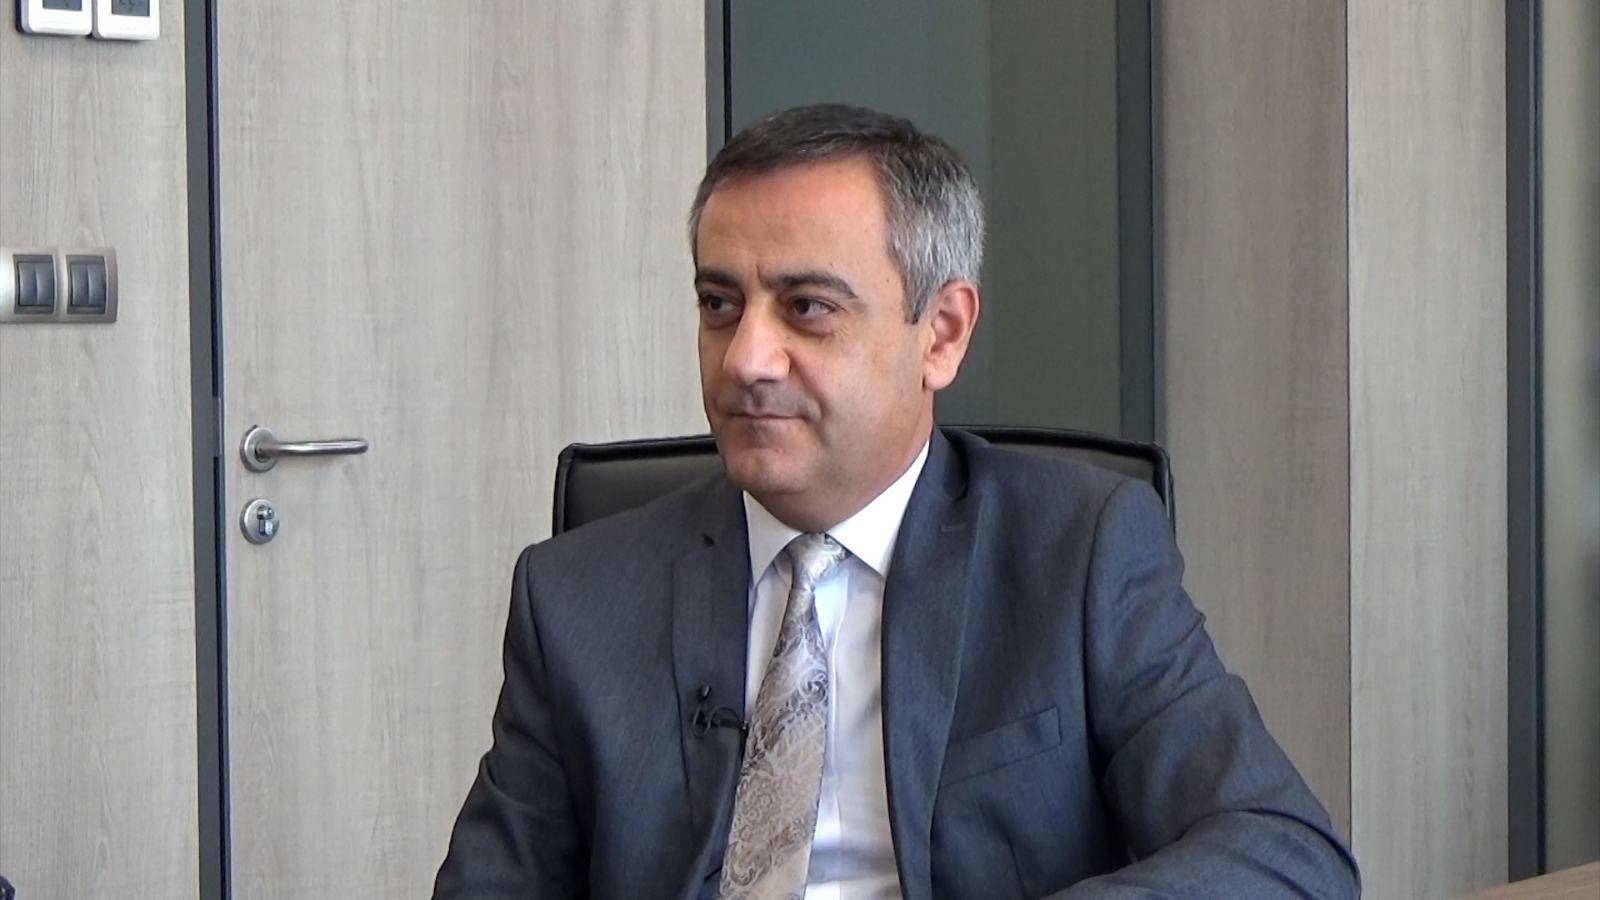 Bringing in more investors to Azerbaijan’s Alat FEZ negotiated (PHOTO/VIDEO)